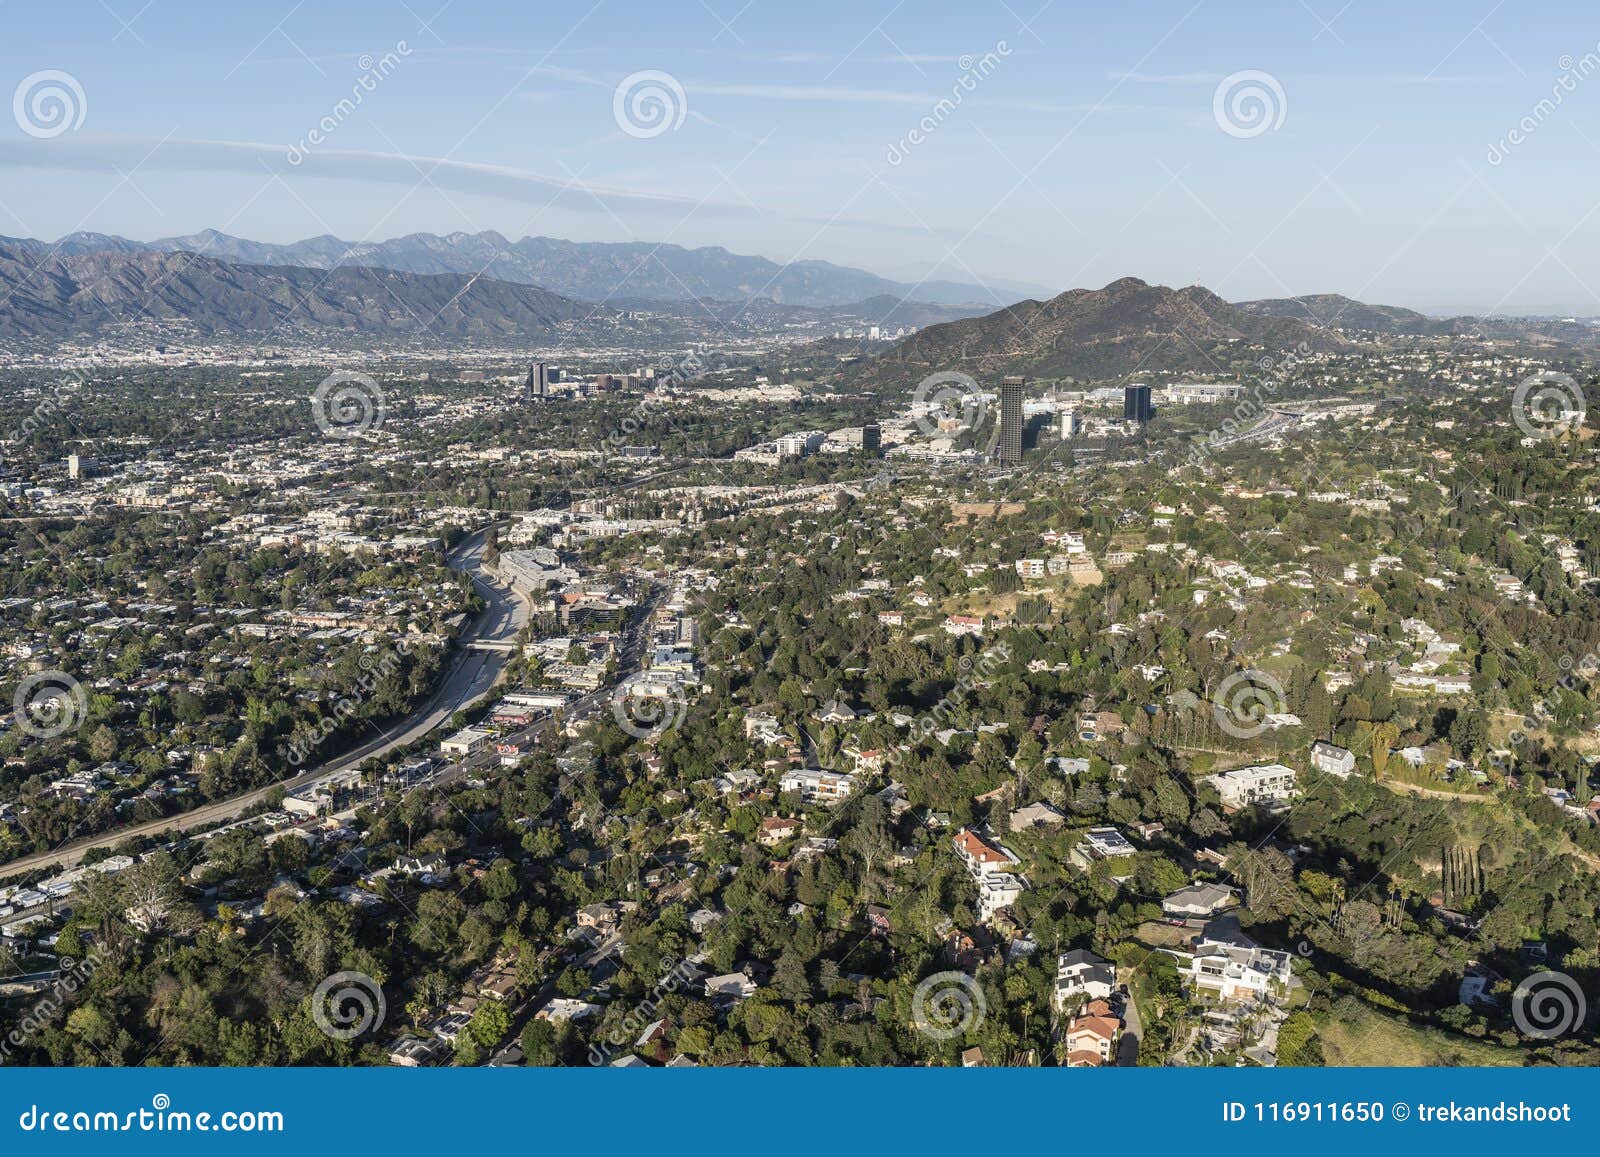 https://thumbs.dreamstime.com/z/sherman-oaks-studio-city-aerial-los-angeles-california-usa-april-view-neighborhoods-san-fernando-valley-116911650.jpg